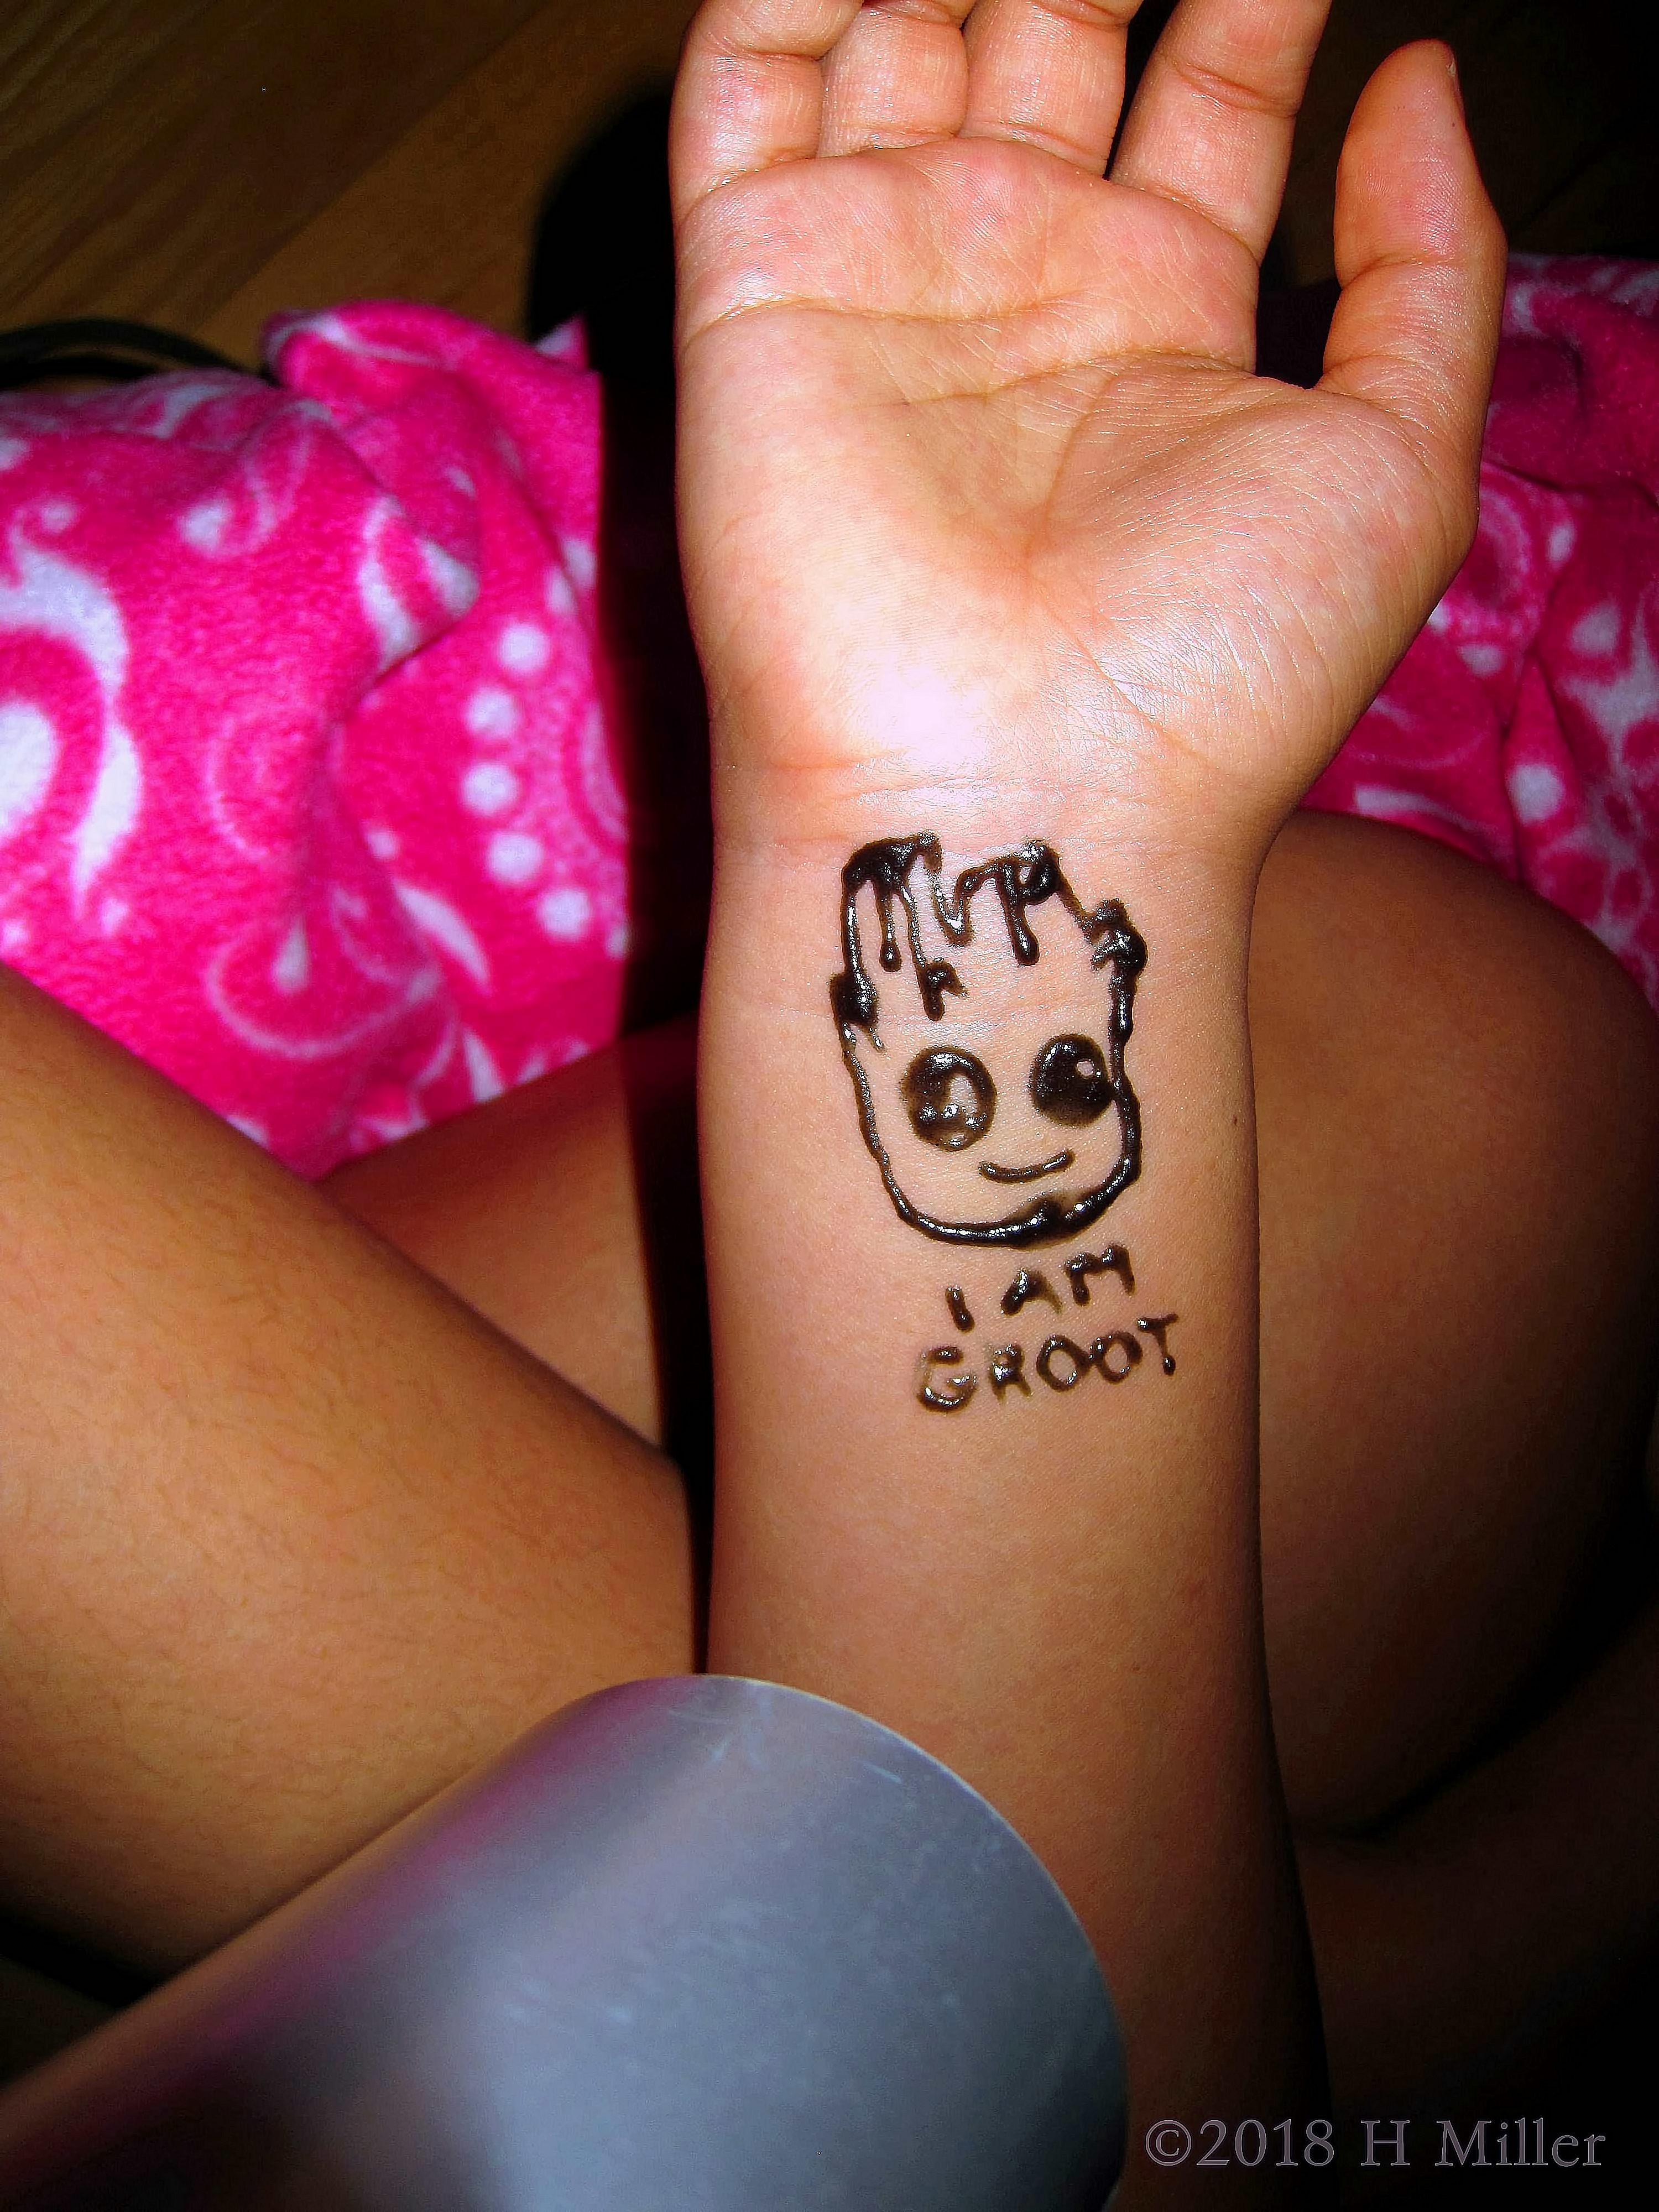 I Am Groot!, Such A Cool Jagua Tattoo. 